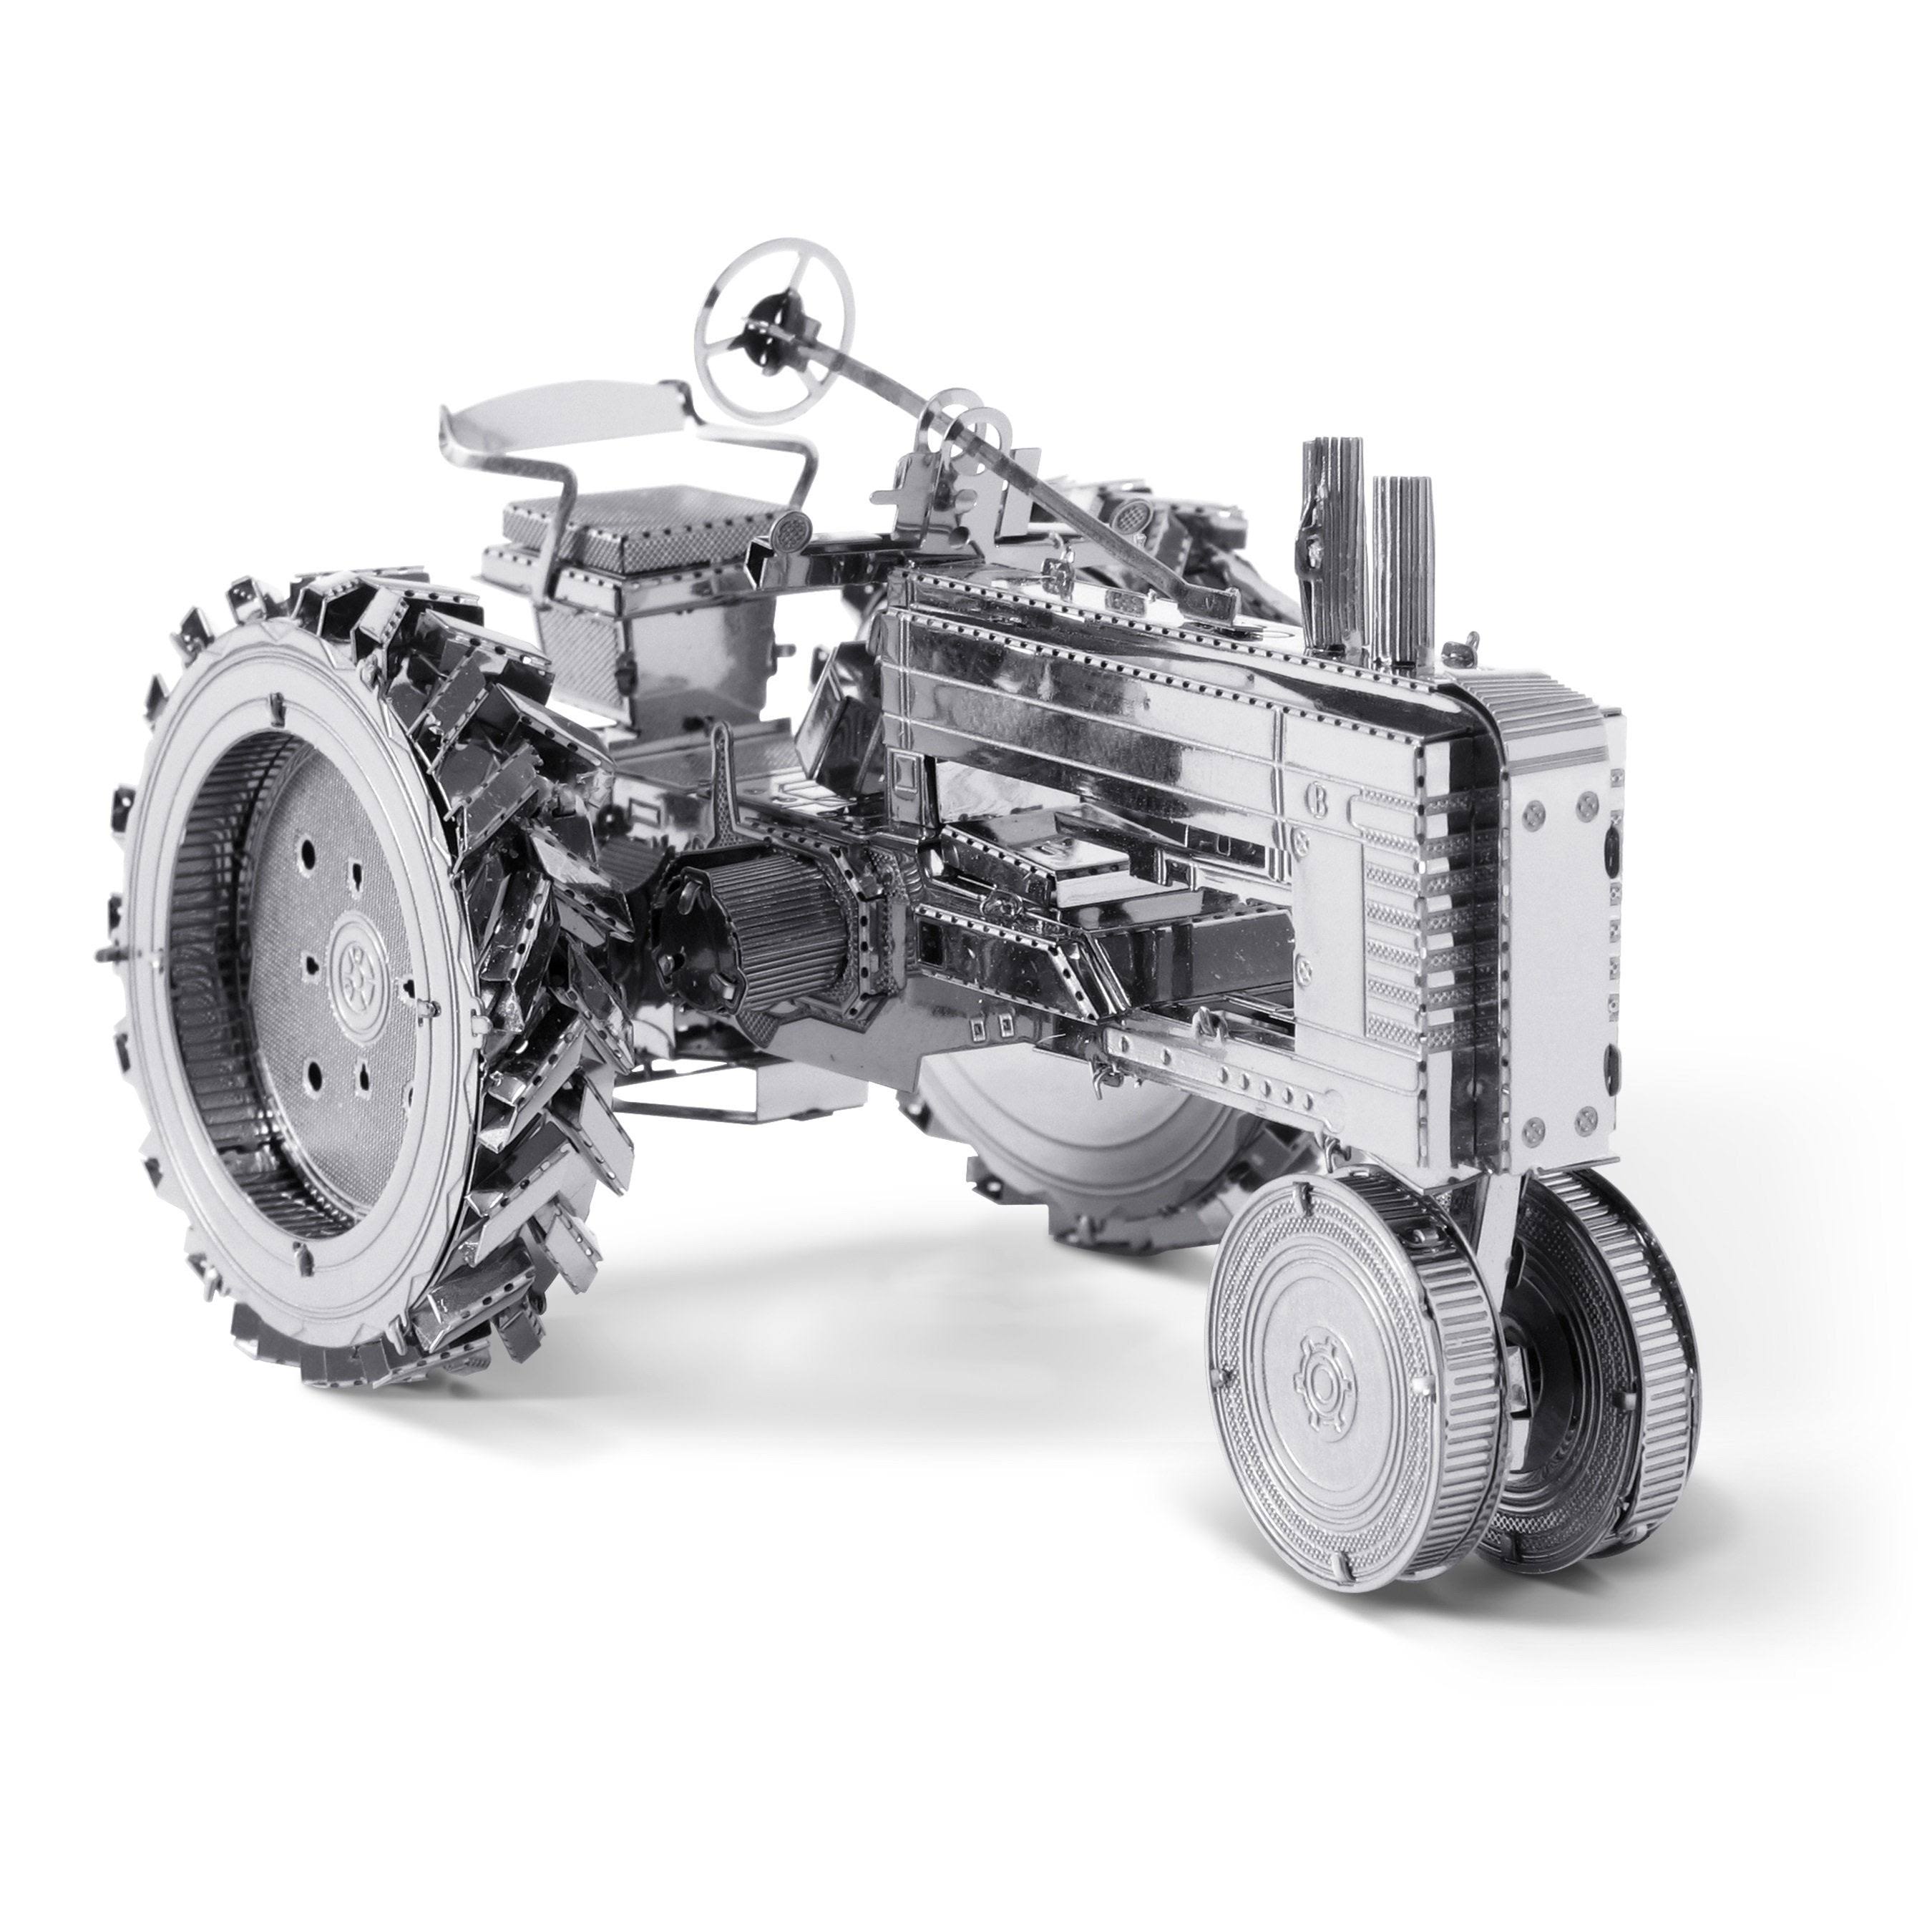 Fascinations Metal Earth 3D Metal Model Kit - Farm Tractor